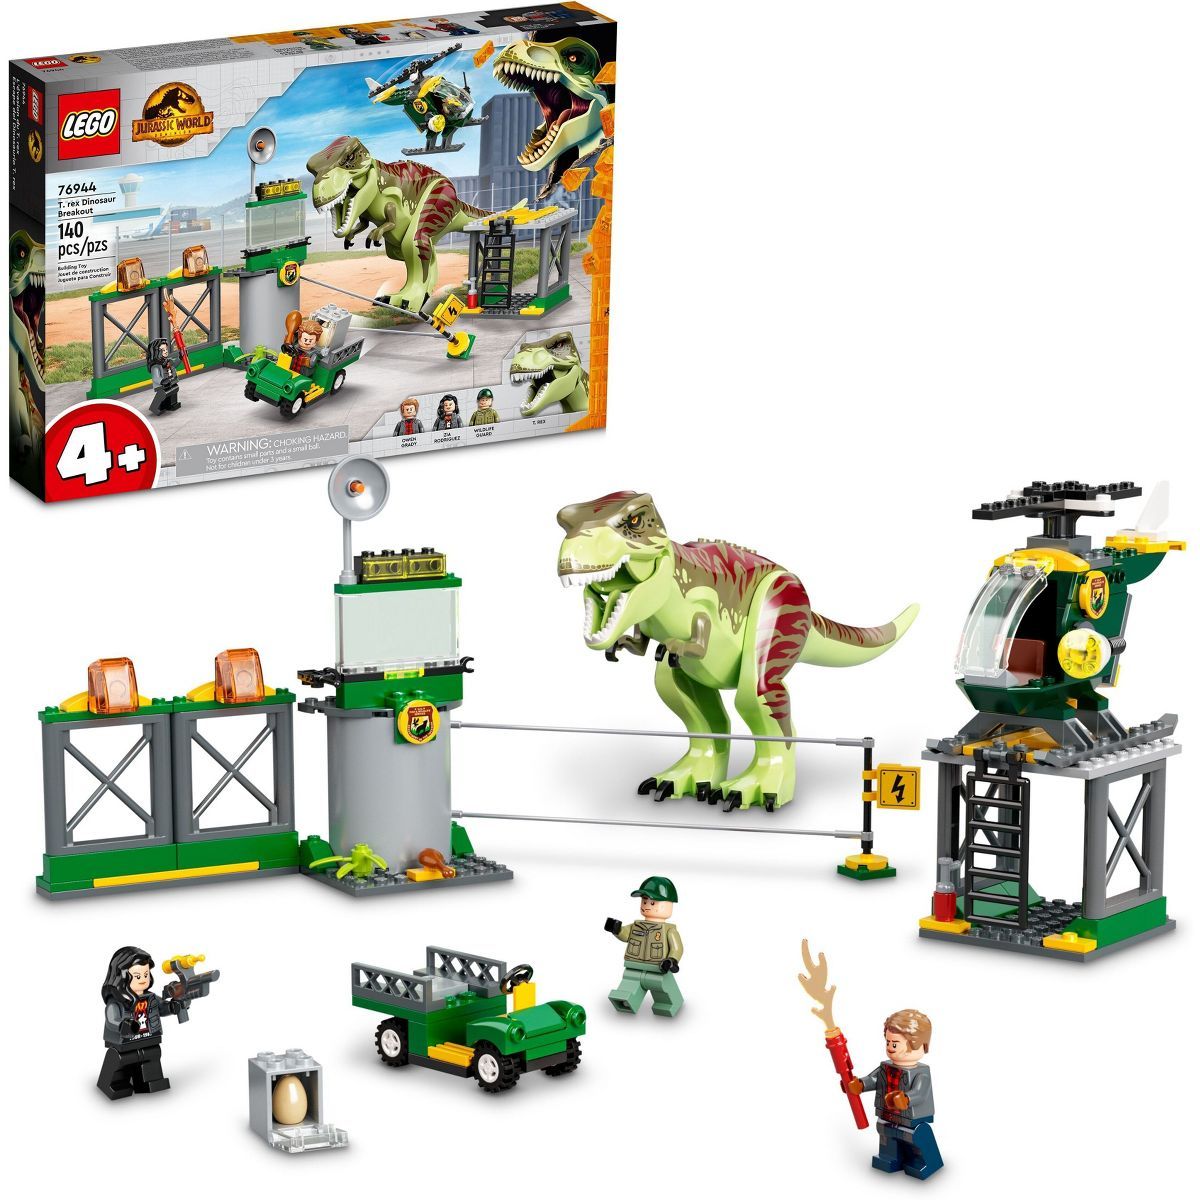 LEGO Jurassic World T. rex Dinosaur Breakout Toy Set 76944 | Target